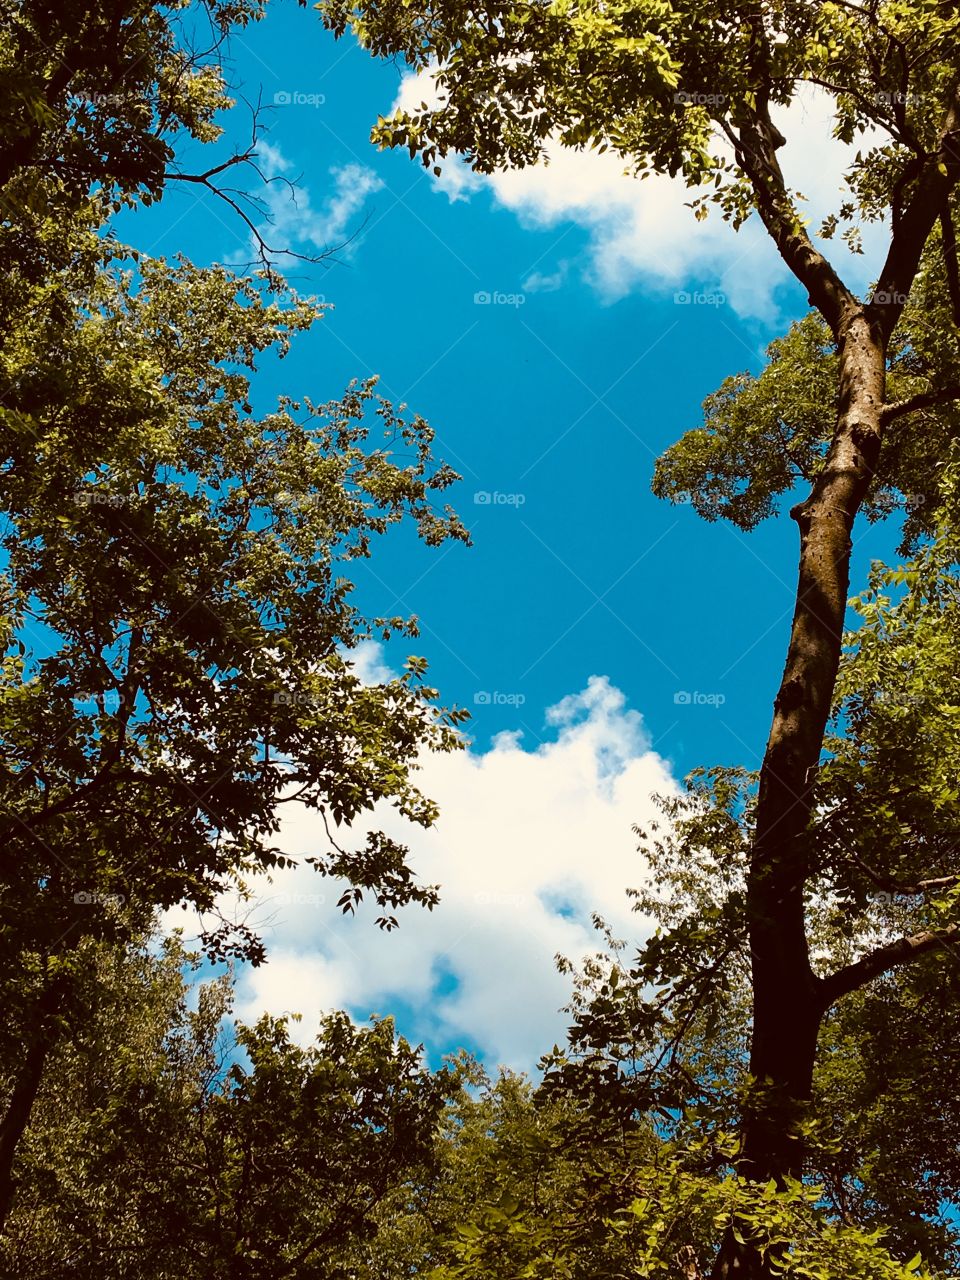 Sky peaking through the trees 